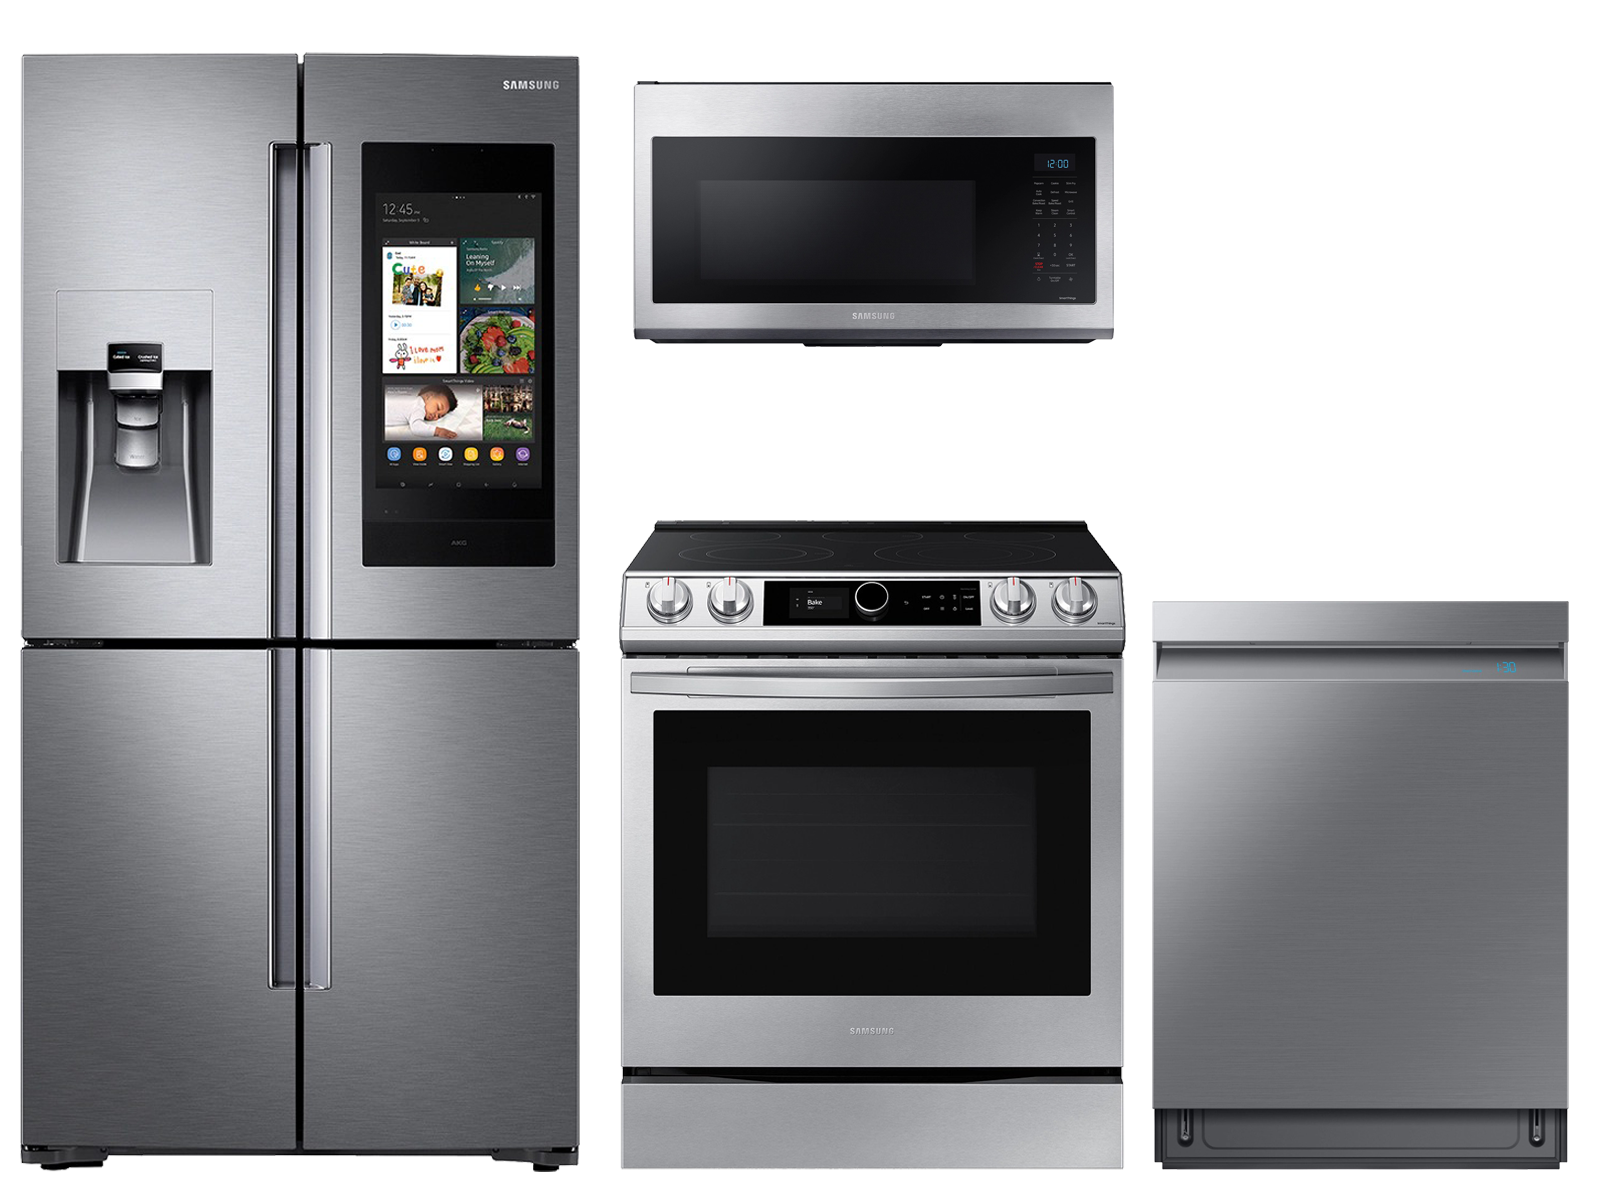 Samsung 22 cu. ft. Family HubTM counter depth 4-door refrigerator, 6.3 cu. ft. electric range, microwave and Smart Linear dishwasher package